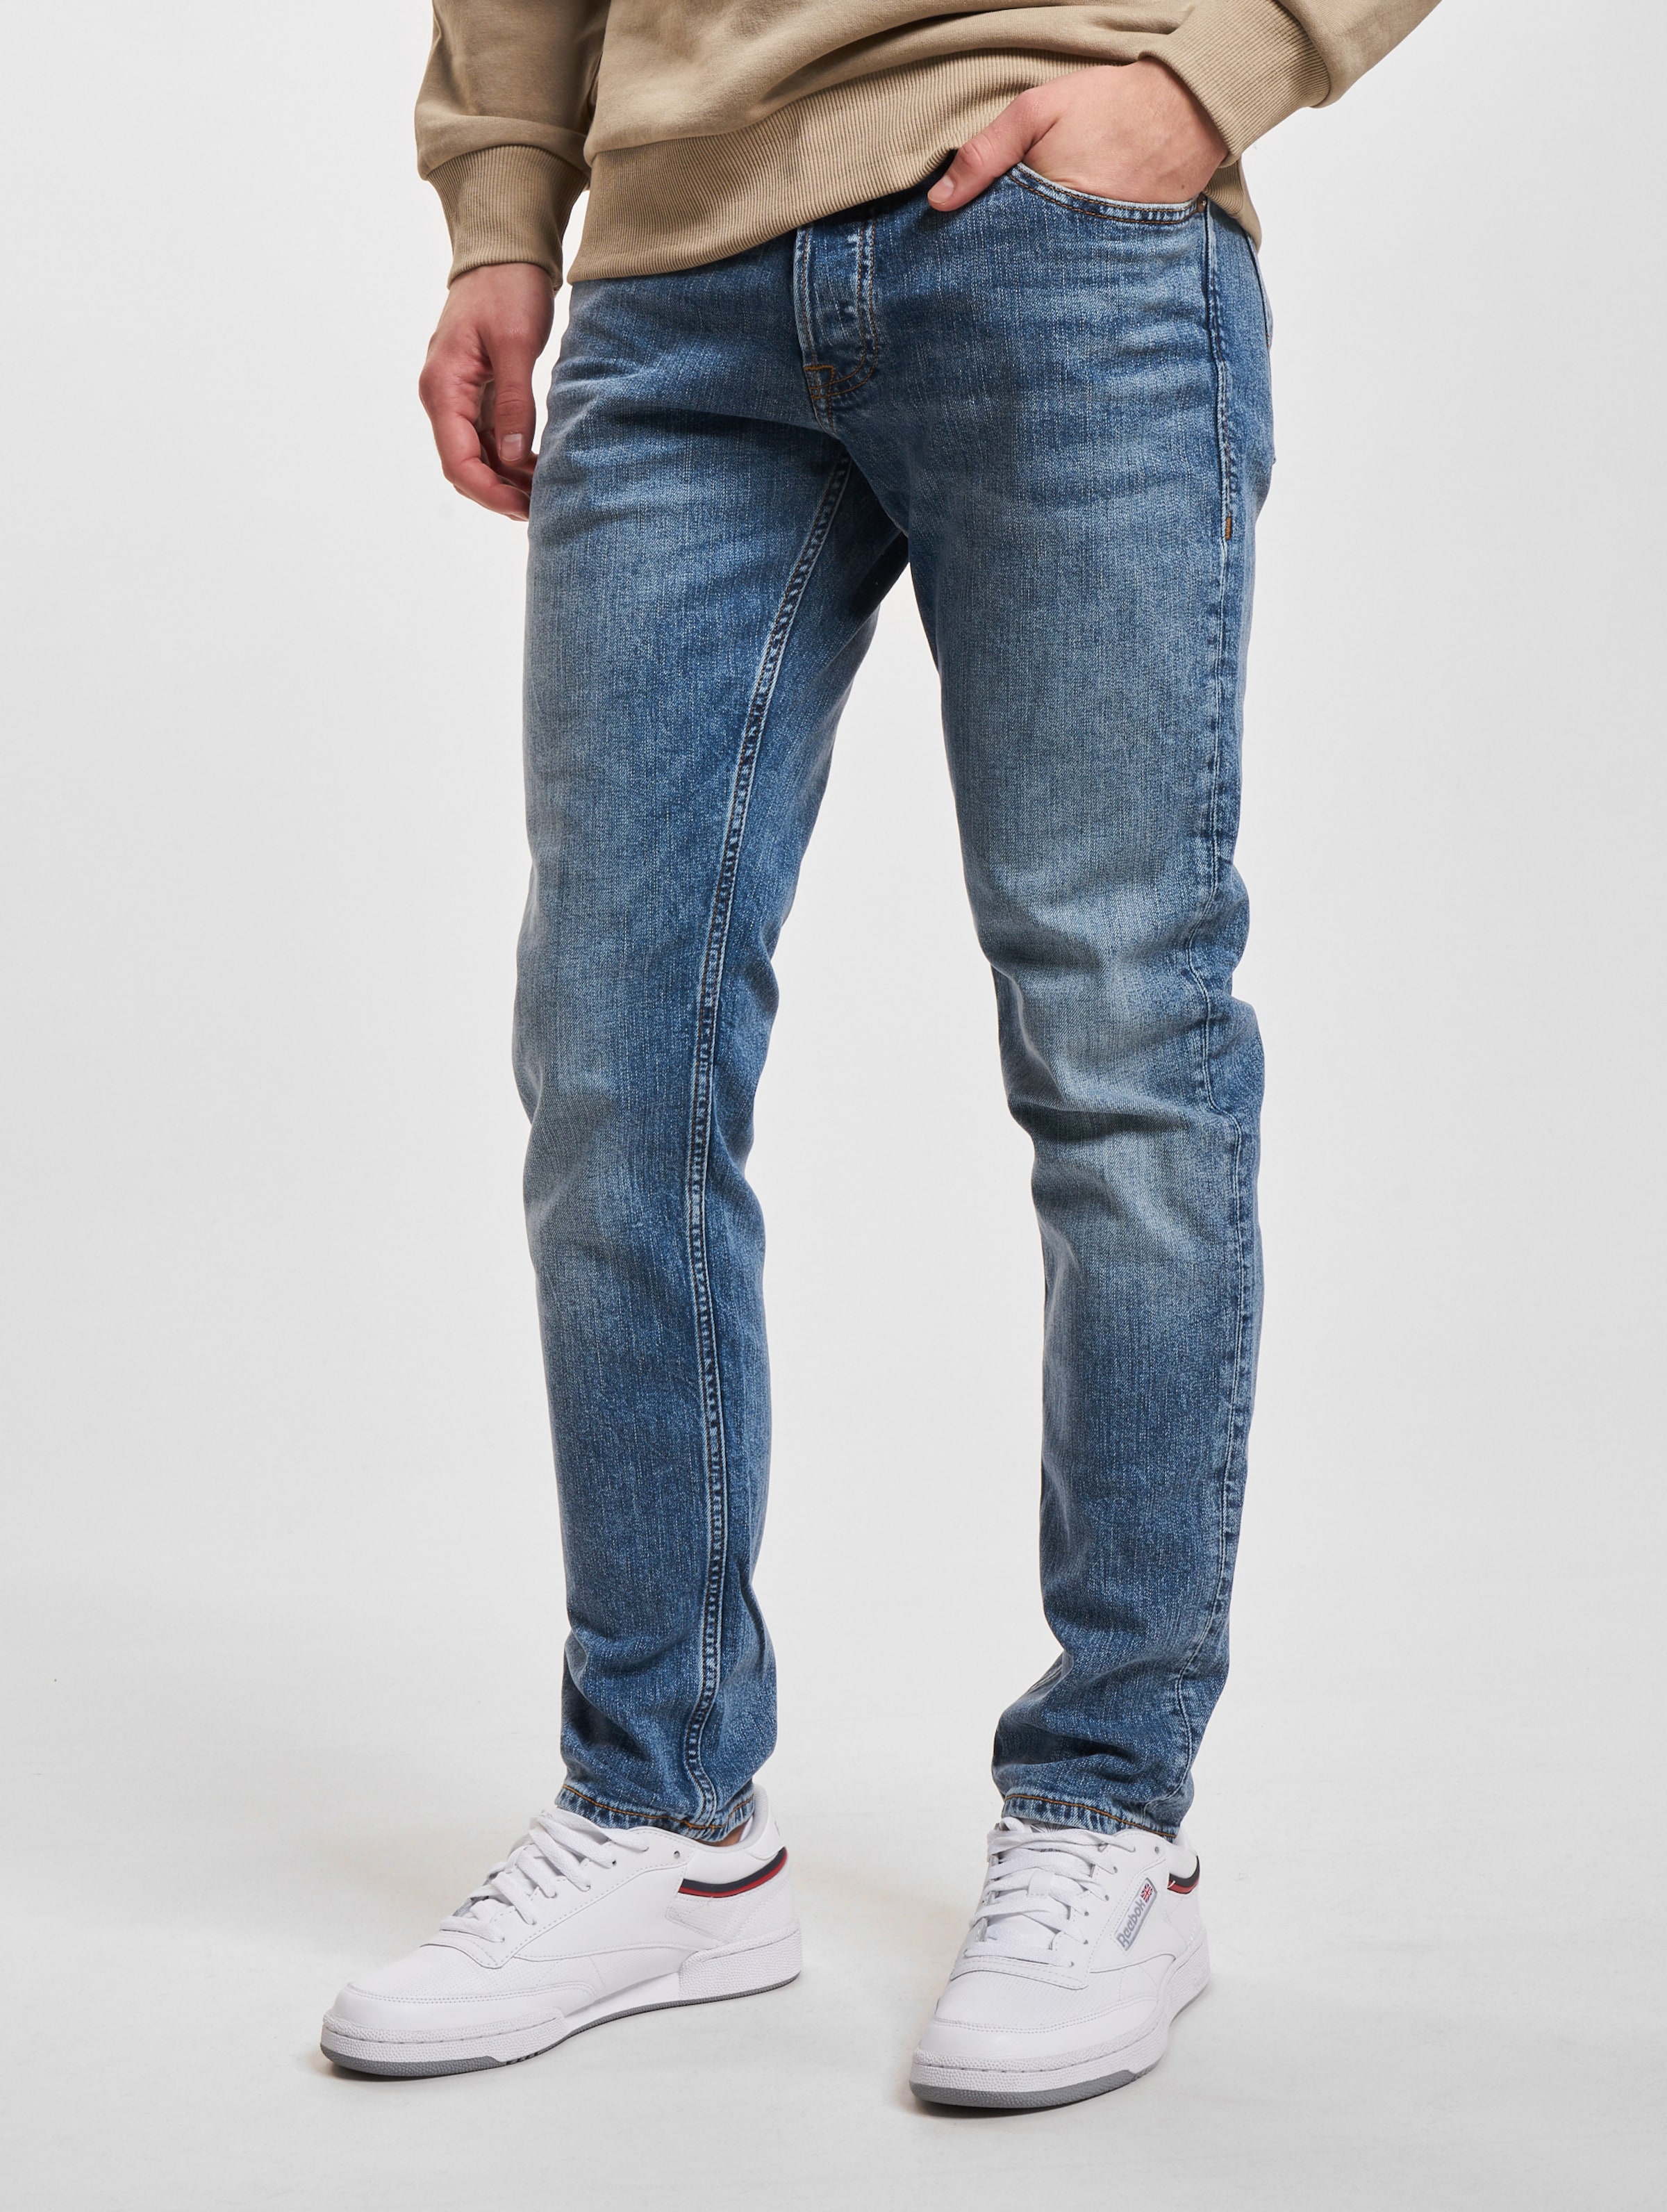 Jack & Jones Glenn Original Skinny Fit Jeans Mannen op kleur blauw, Maat 3134_1